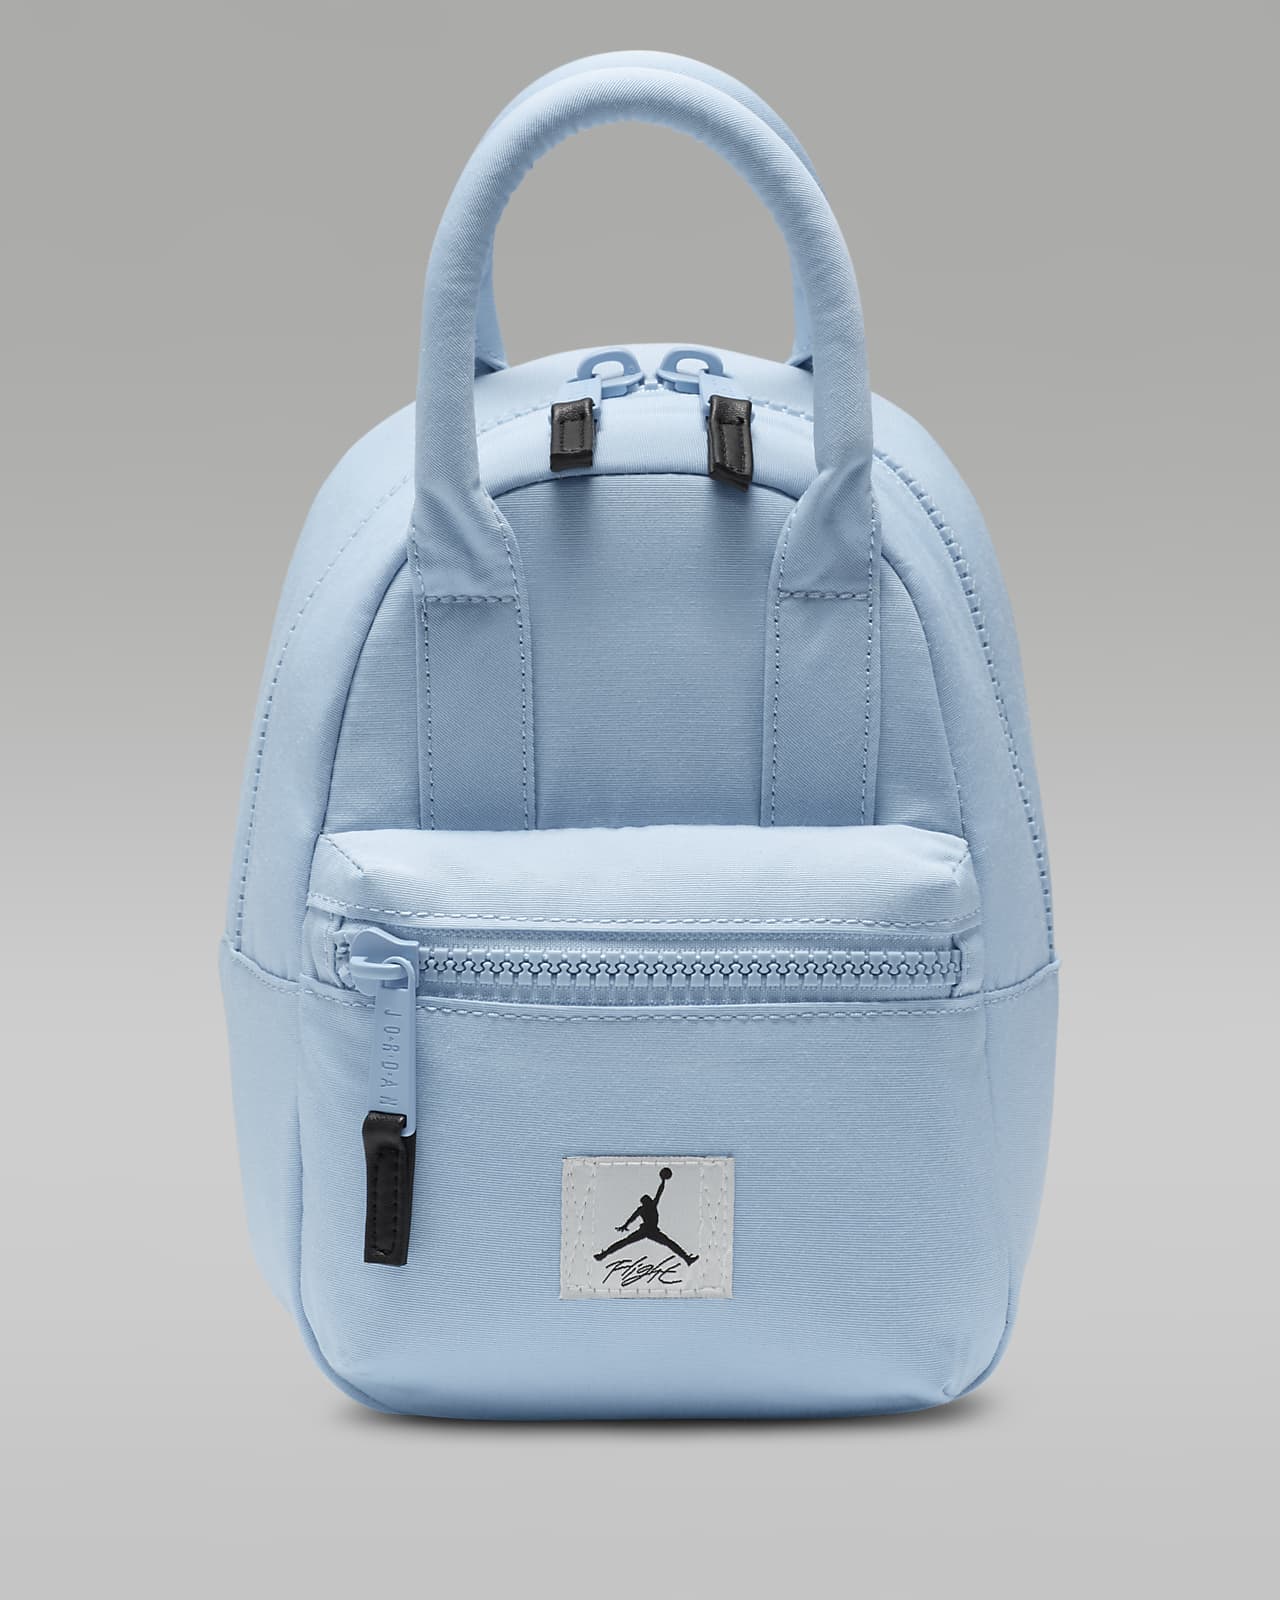 Jordan Flight Mini Backpack Backpack (4L)